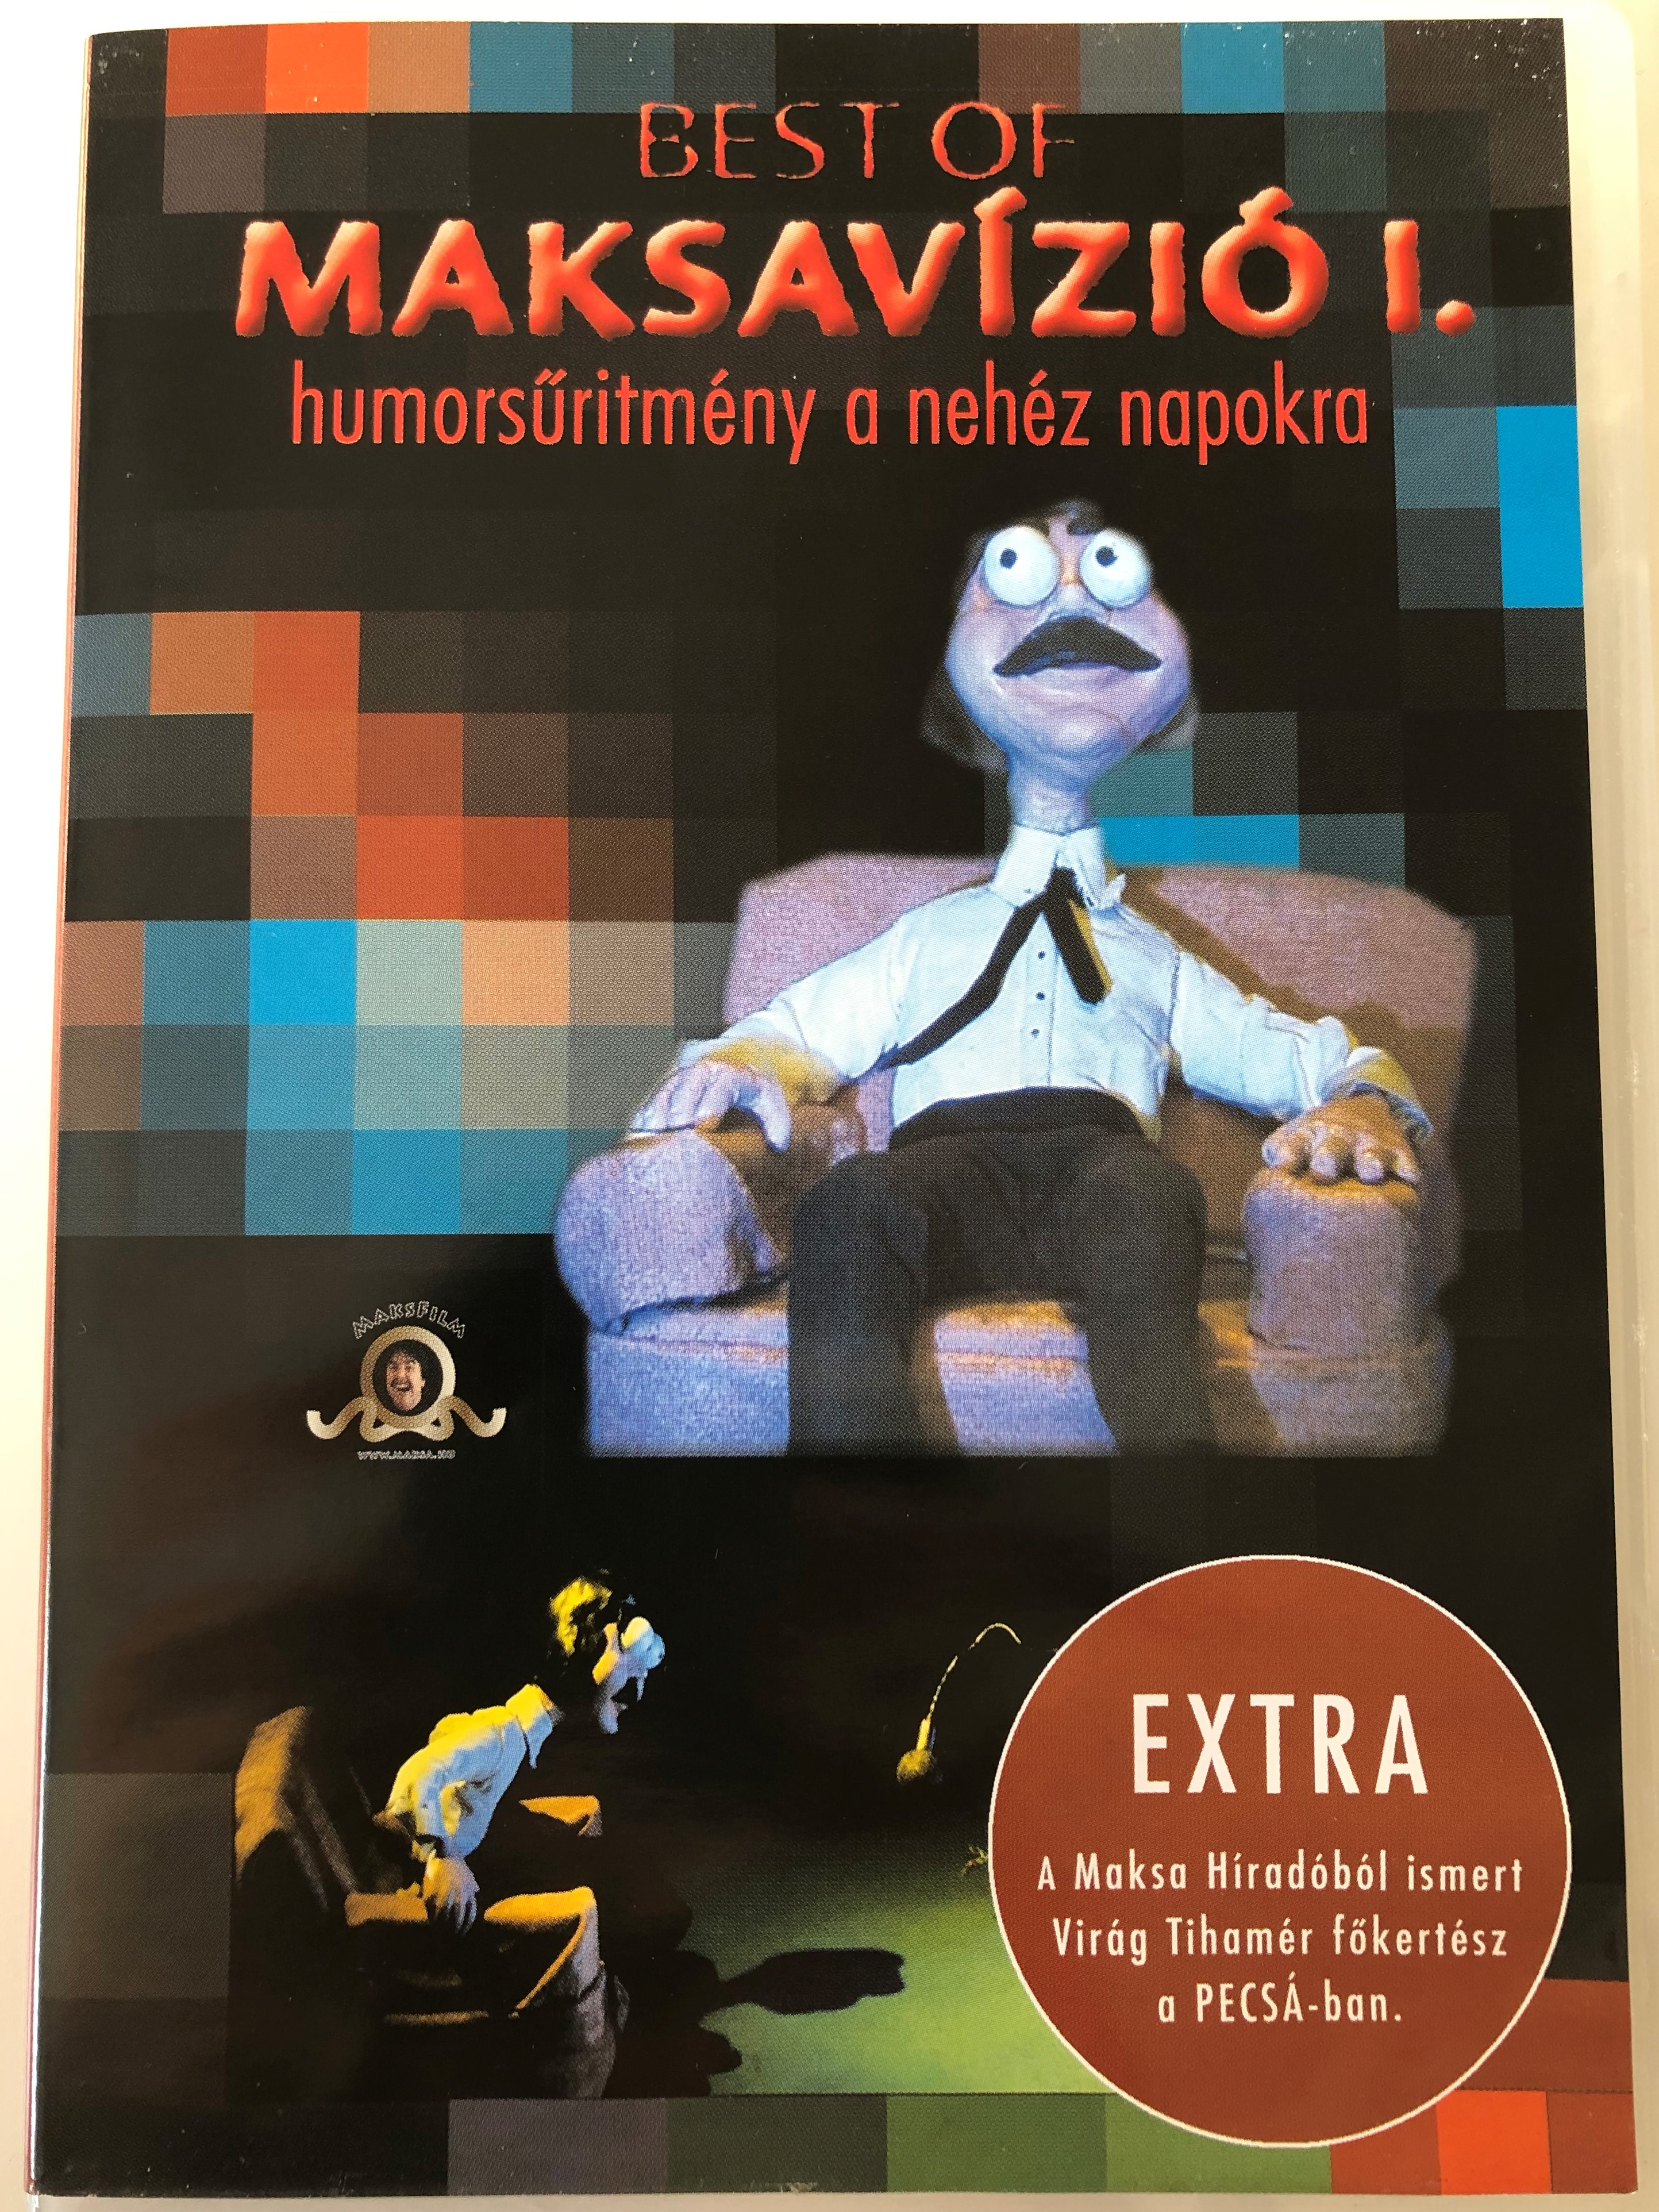 best-of-maksav-zi-1.-dvd-2003-humors-r-tm-ny-a-neh-z-napokra-1.jpg